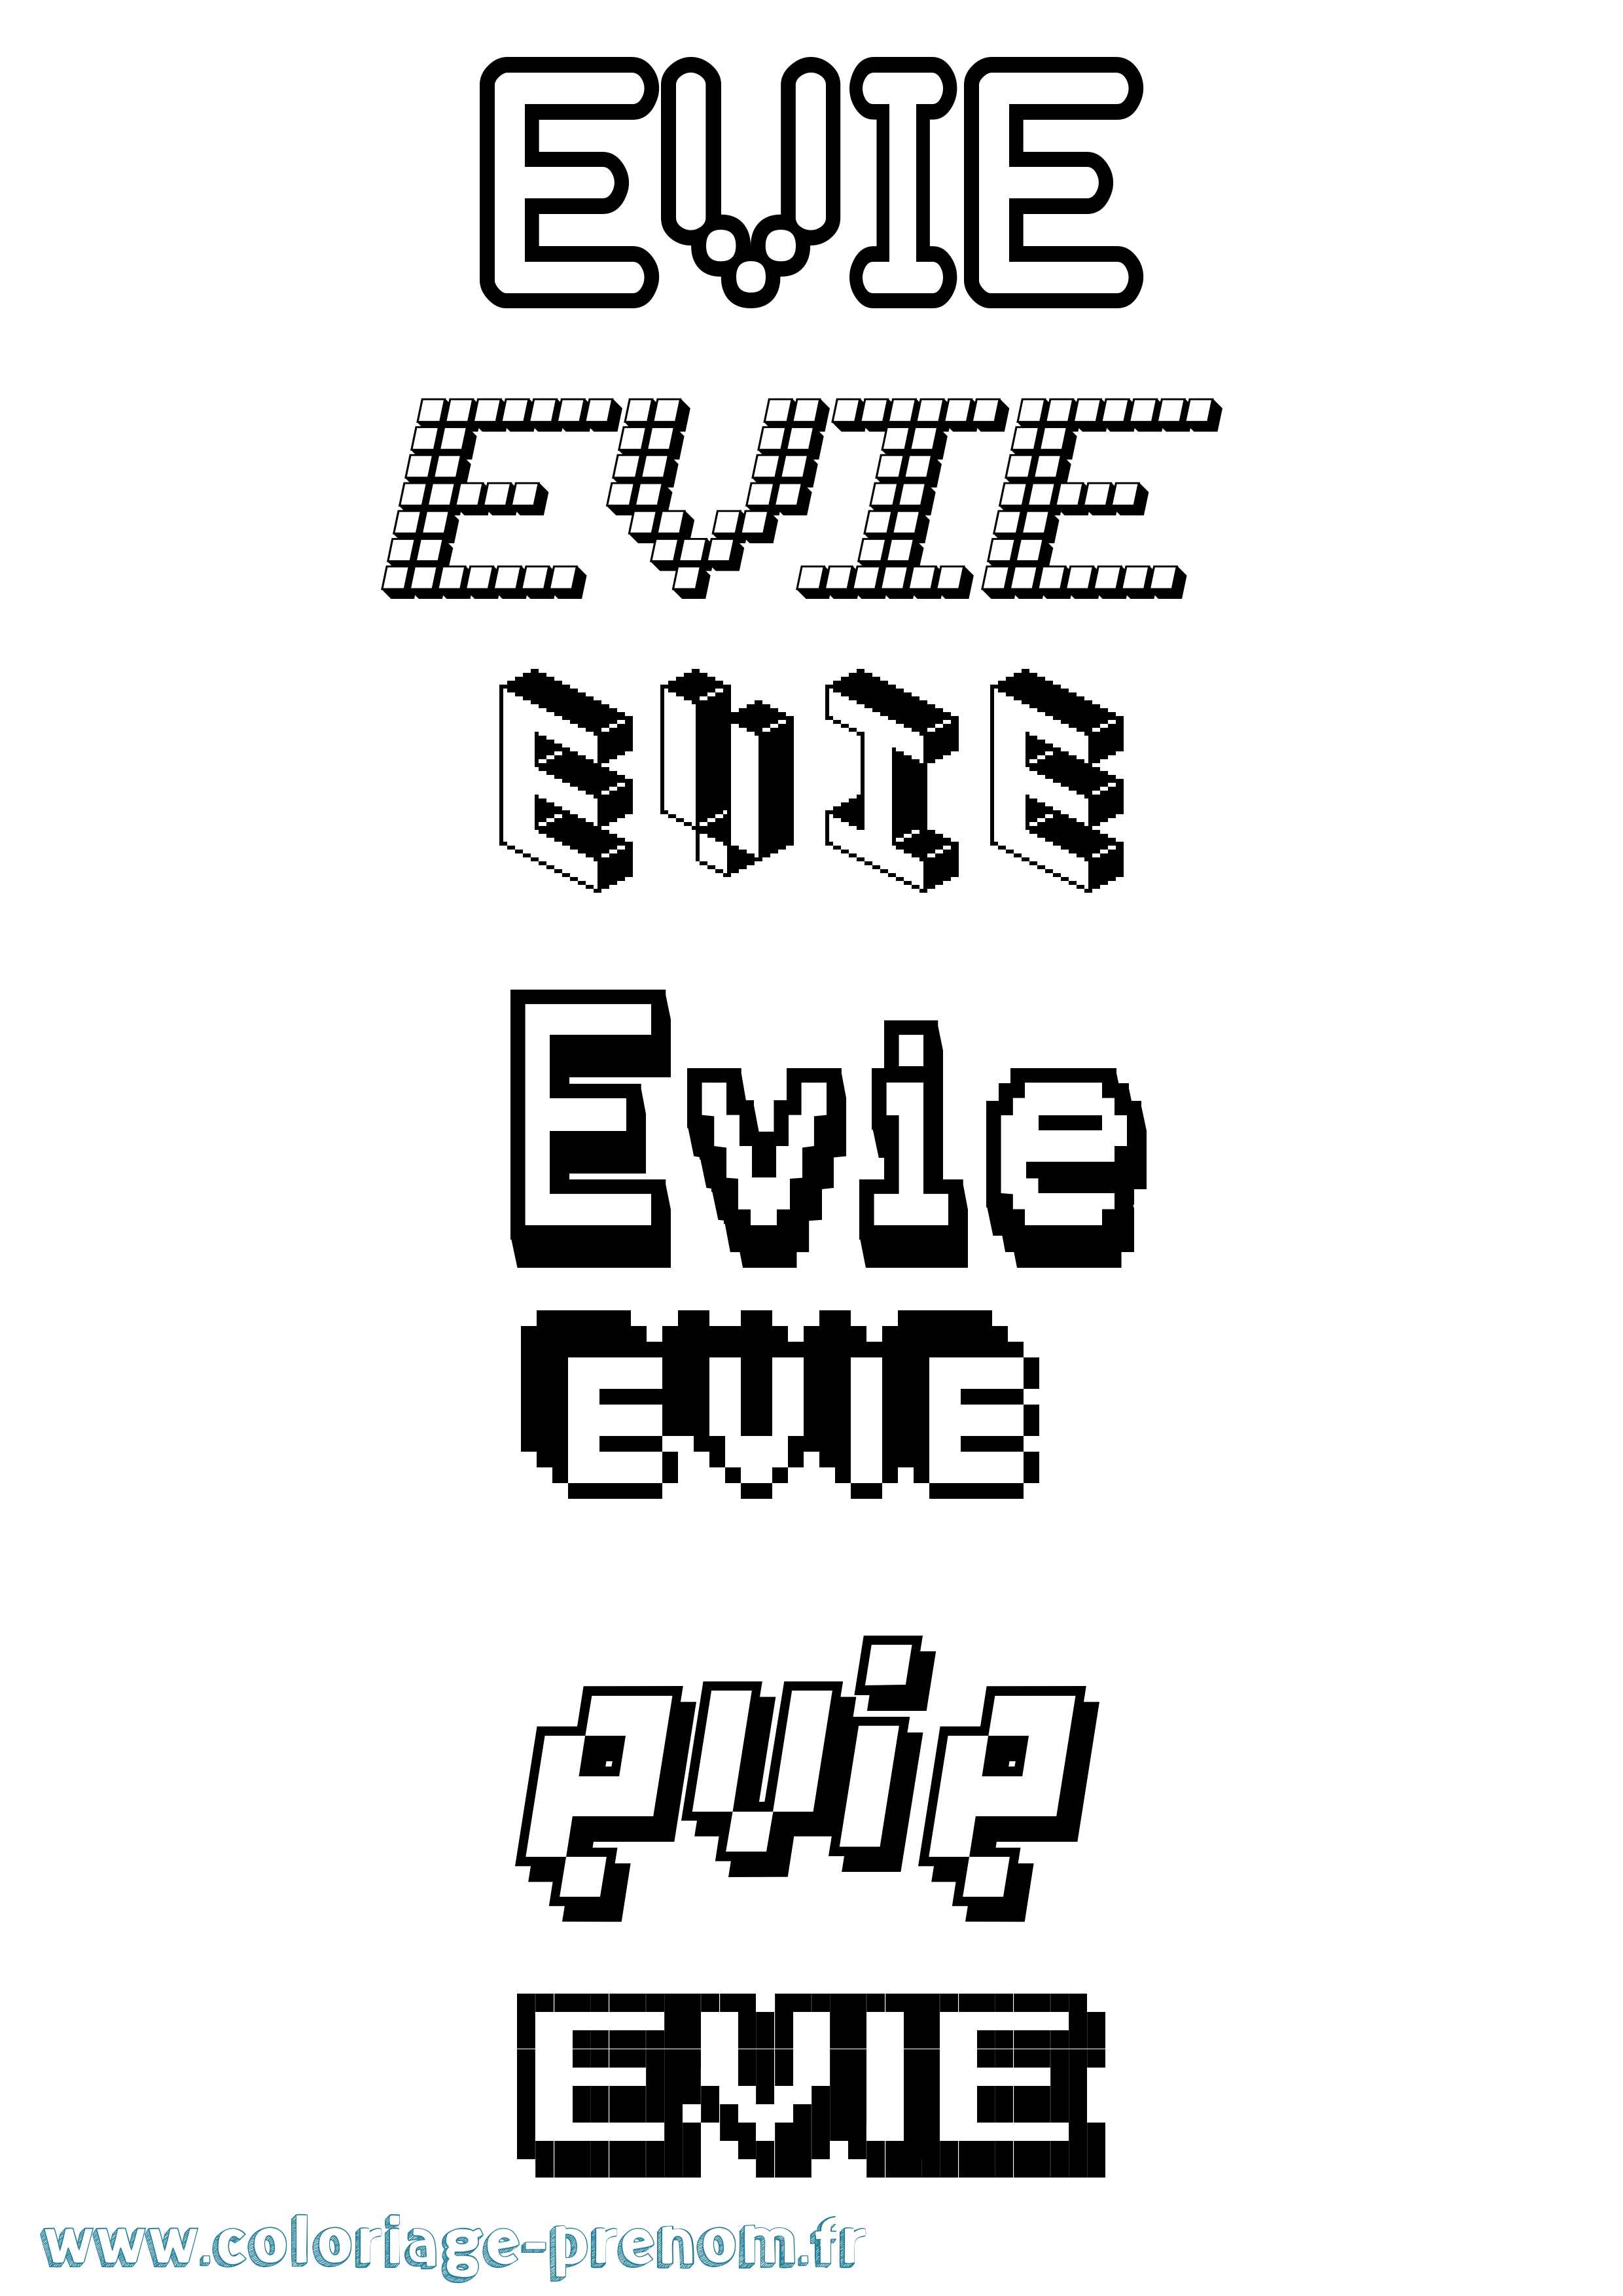 Coloriage prénom Evie Pixel